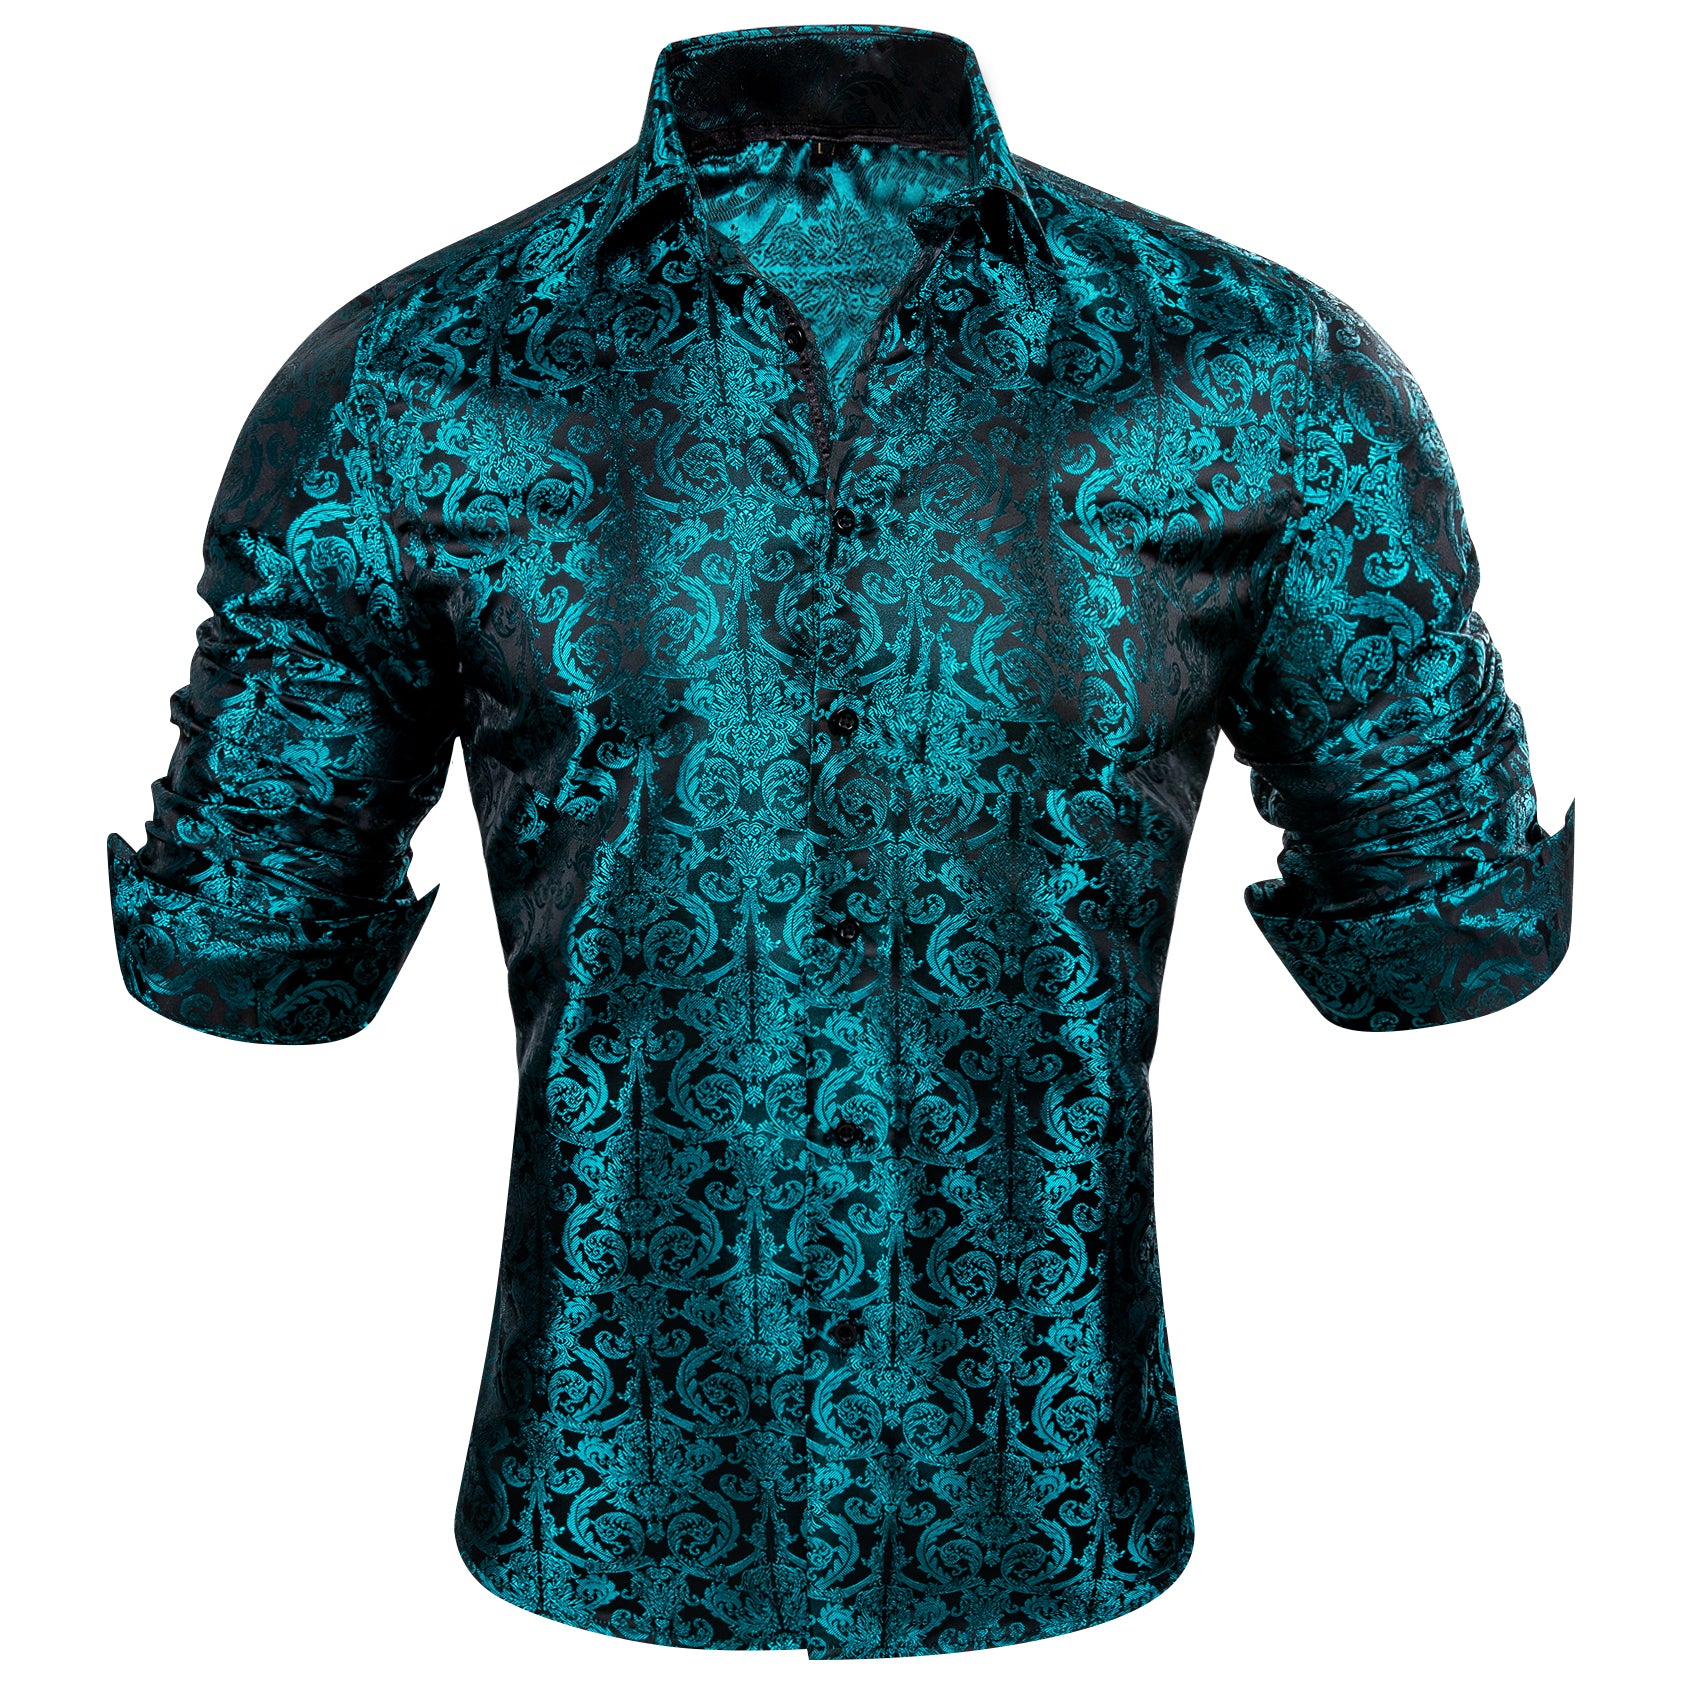 Barry.wang Luxury Blue Paisley Silk Shirt